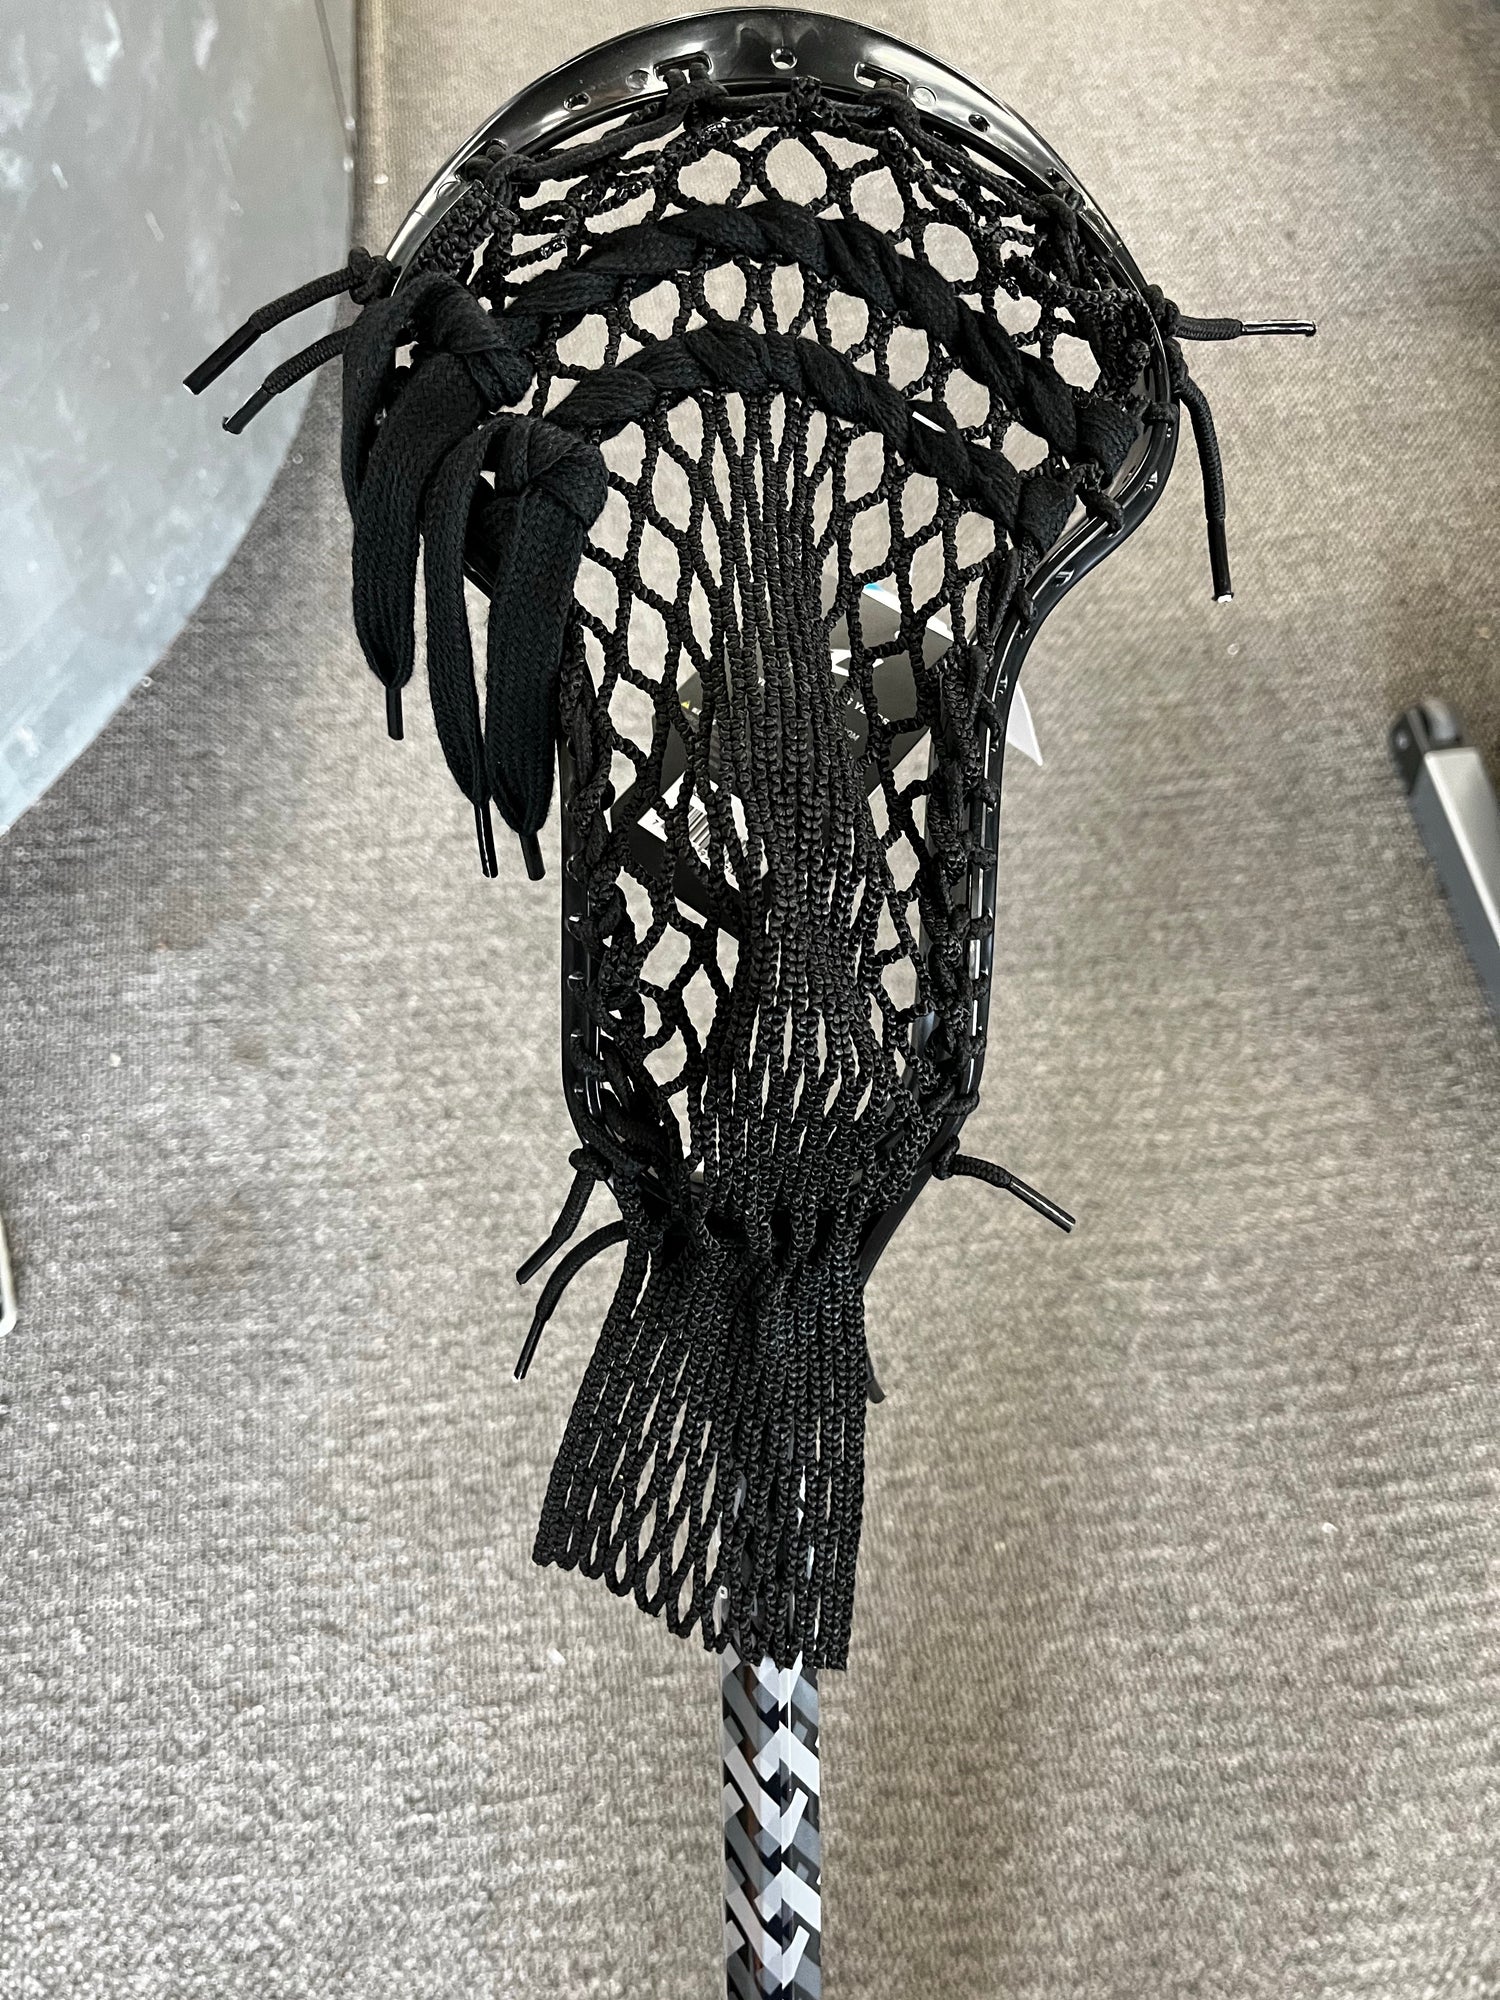 Champro Adult Lacrosse Stick